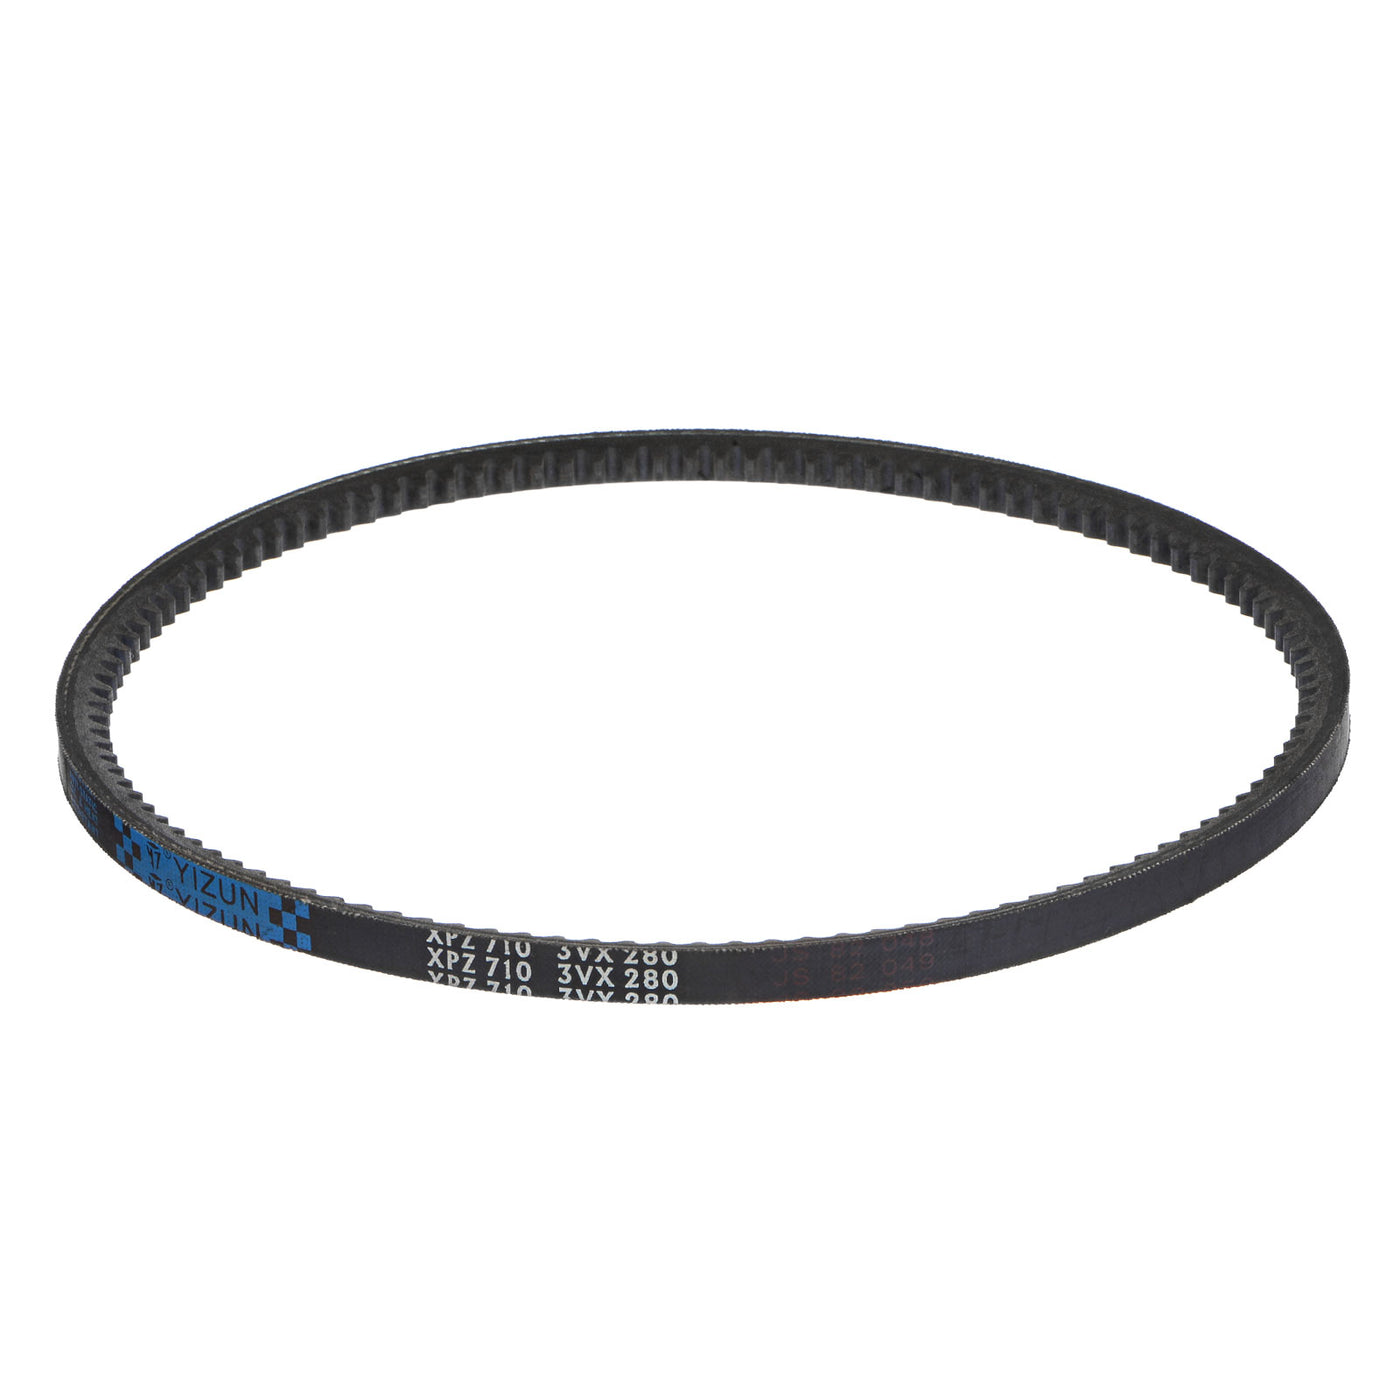 Harfington XPZ710/3VX280 V-Belts Drive Belt 710mm Pitch Length Rubber for Transmission